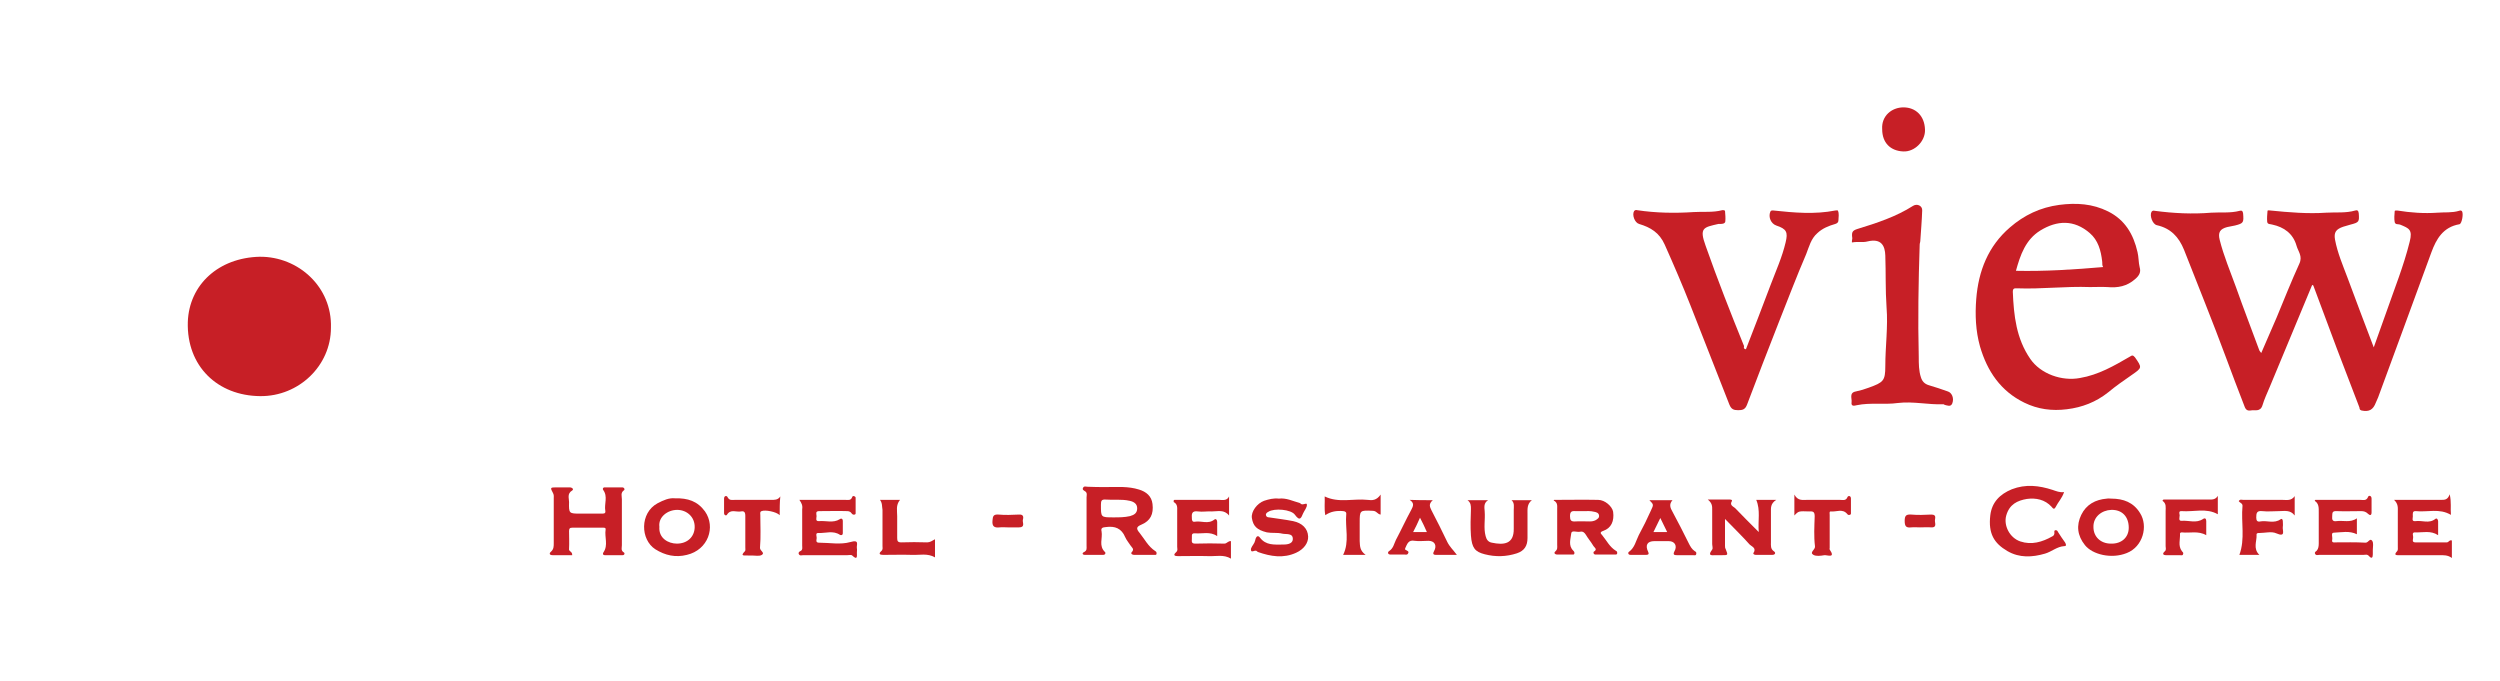 Dalat-view-logo